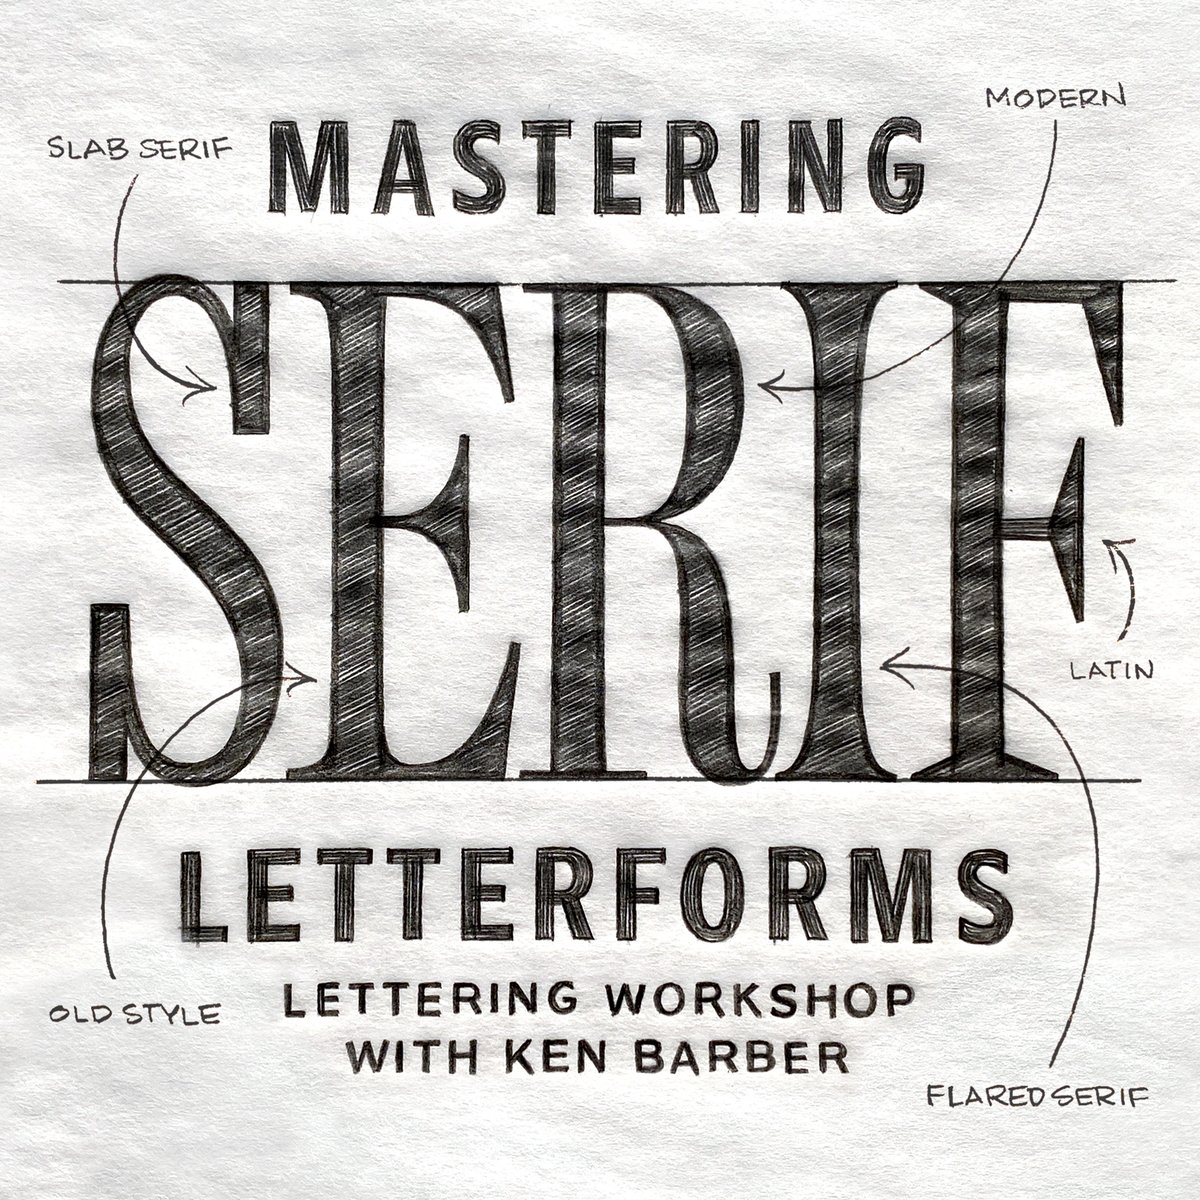 ONLINE LETTERING WORKSHOP! Learn the secrets of drawing serif letterforms on June 10. Sign up here: eventbrite.com/e/mastering-se…